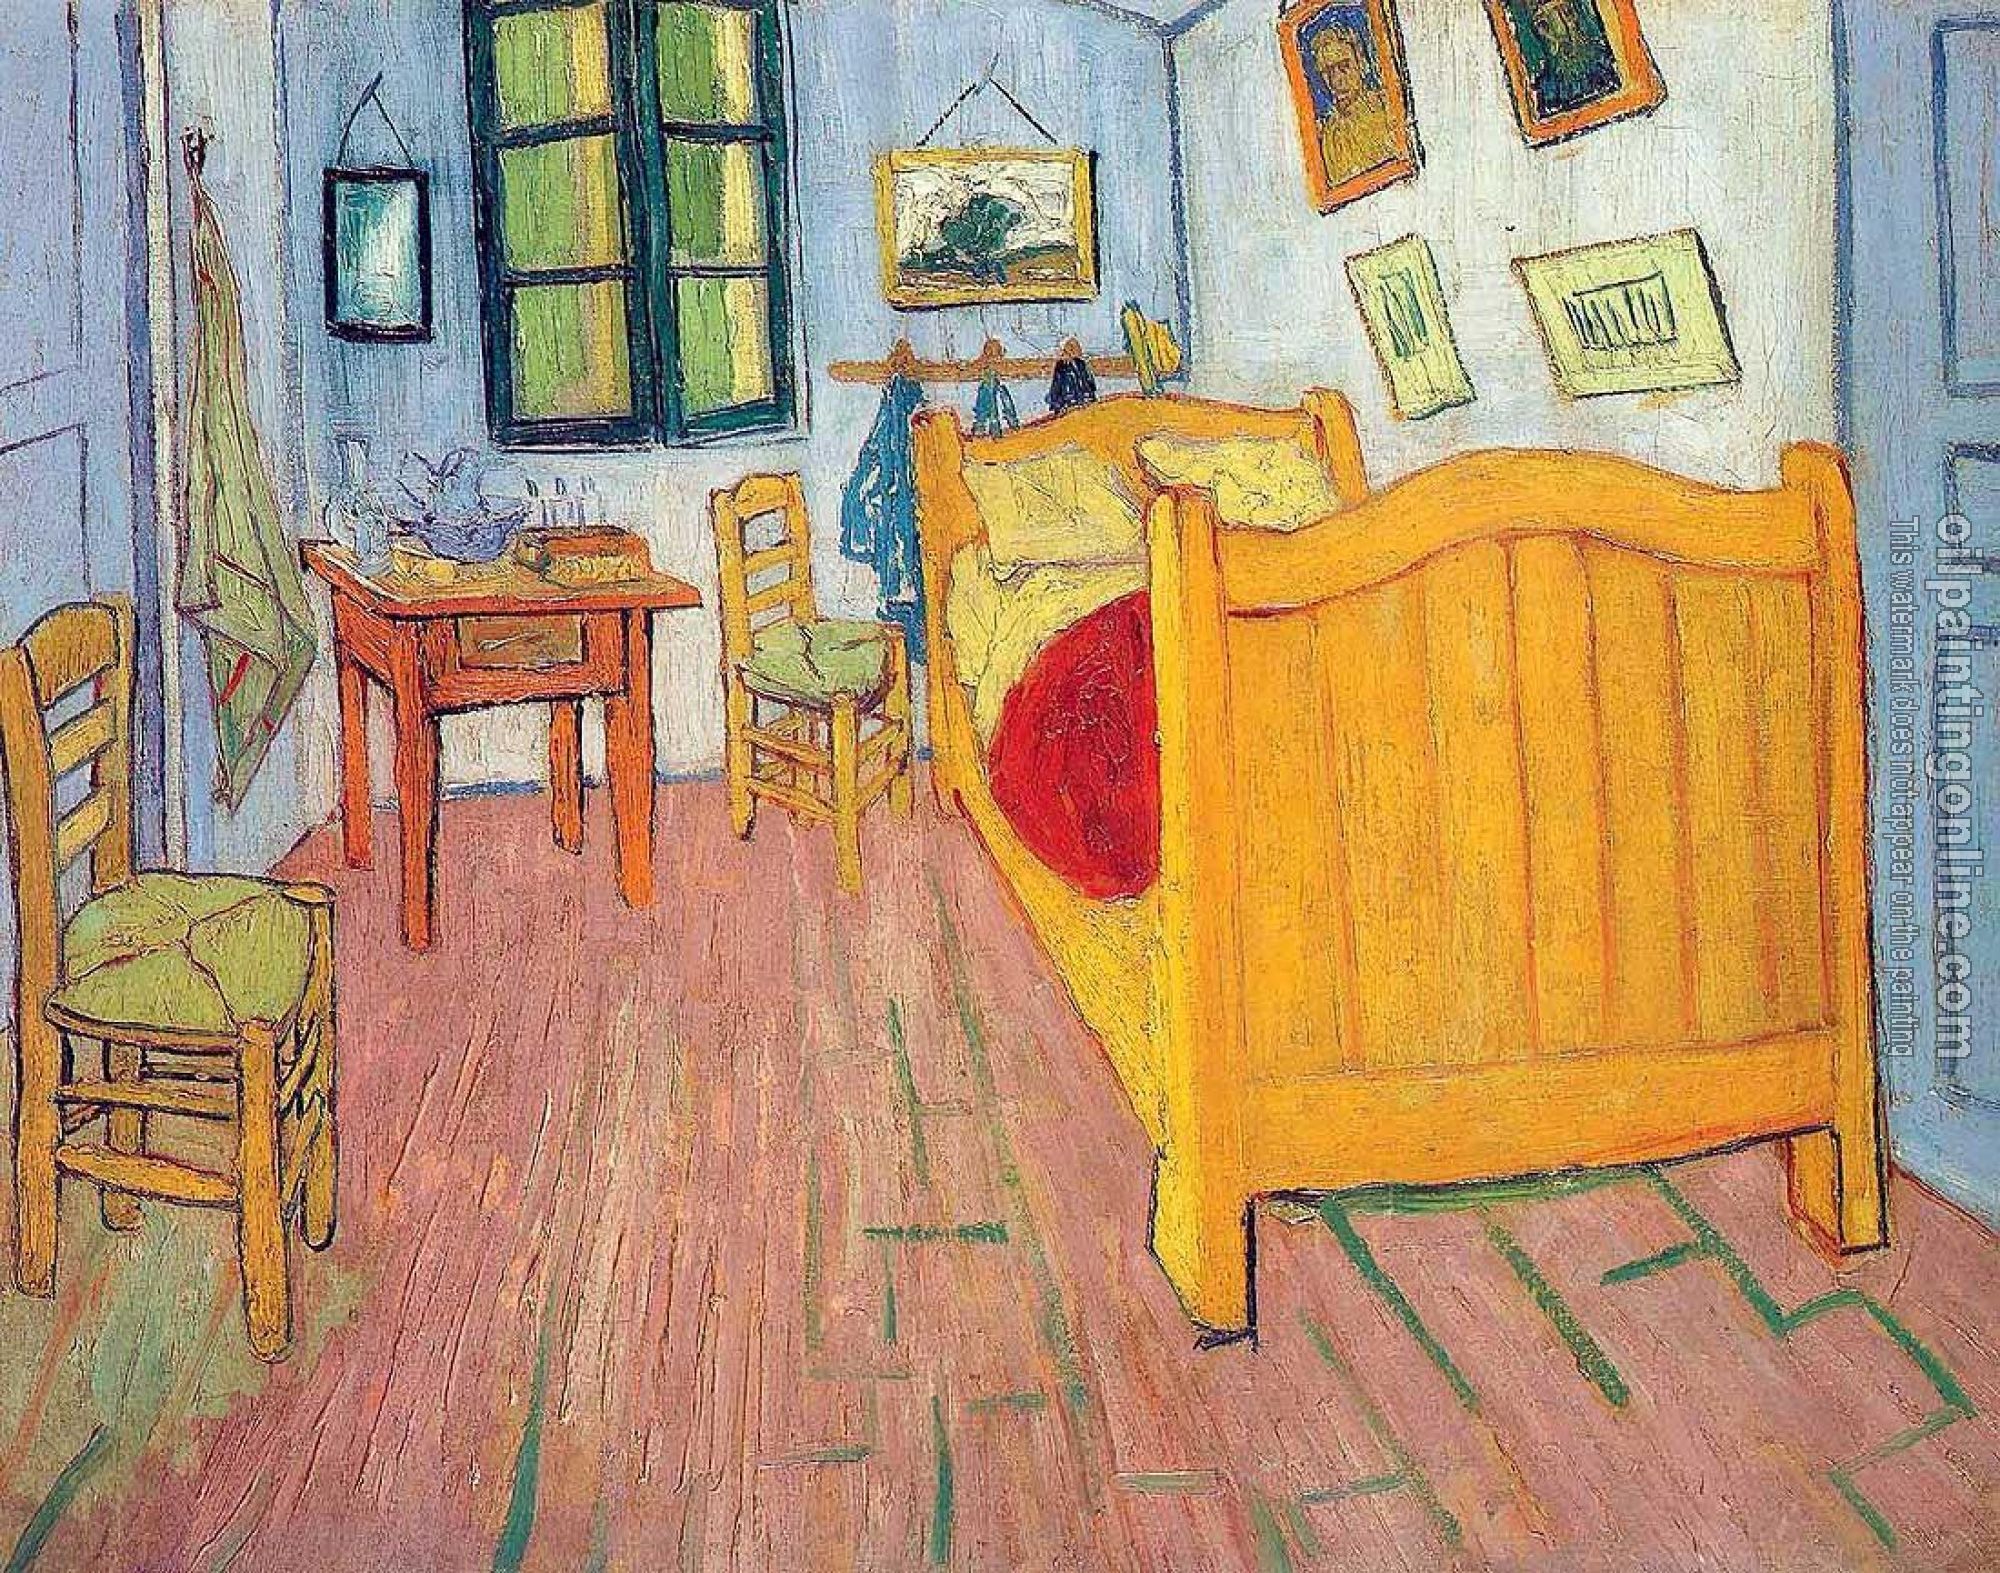 Gogh, Vincent van - Vincent's Bedroom in Arles